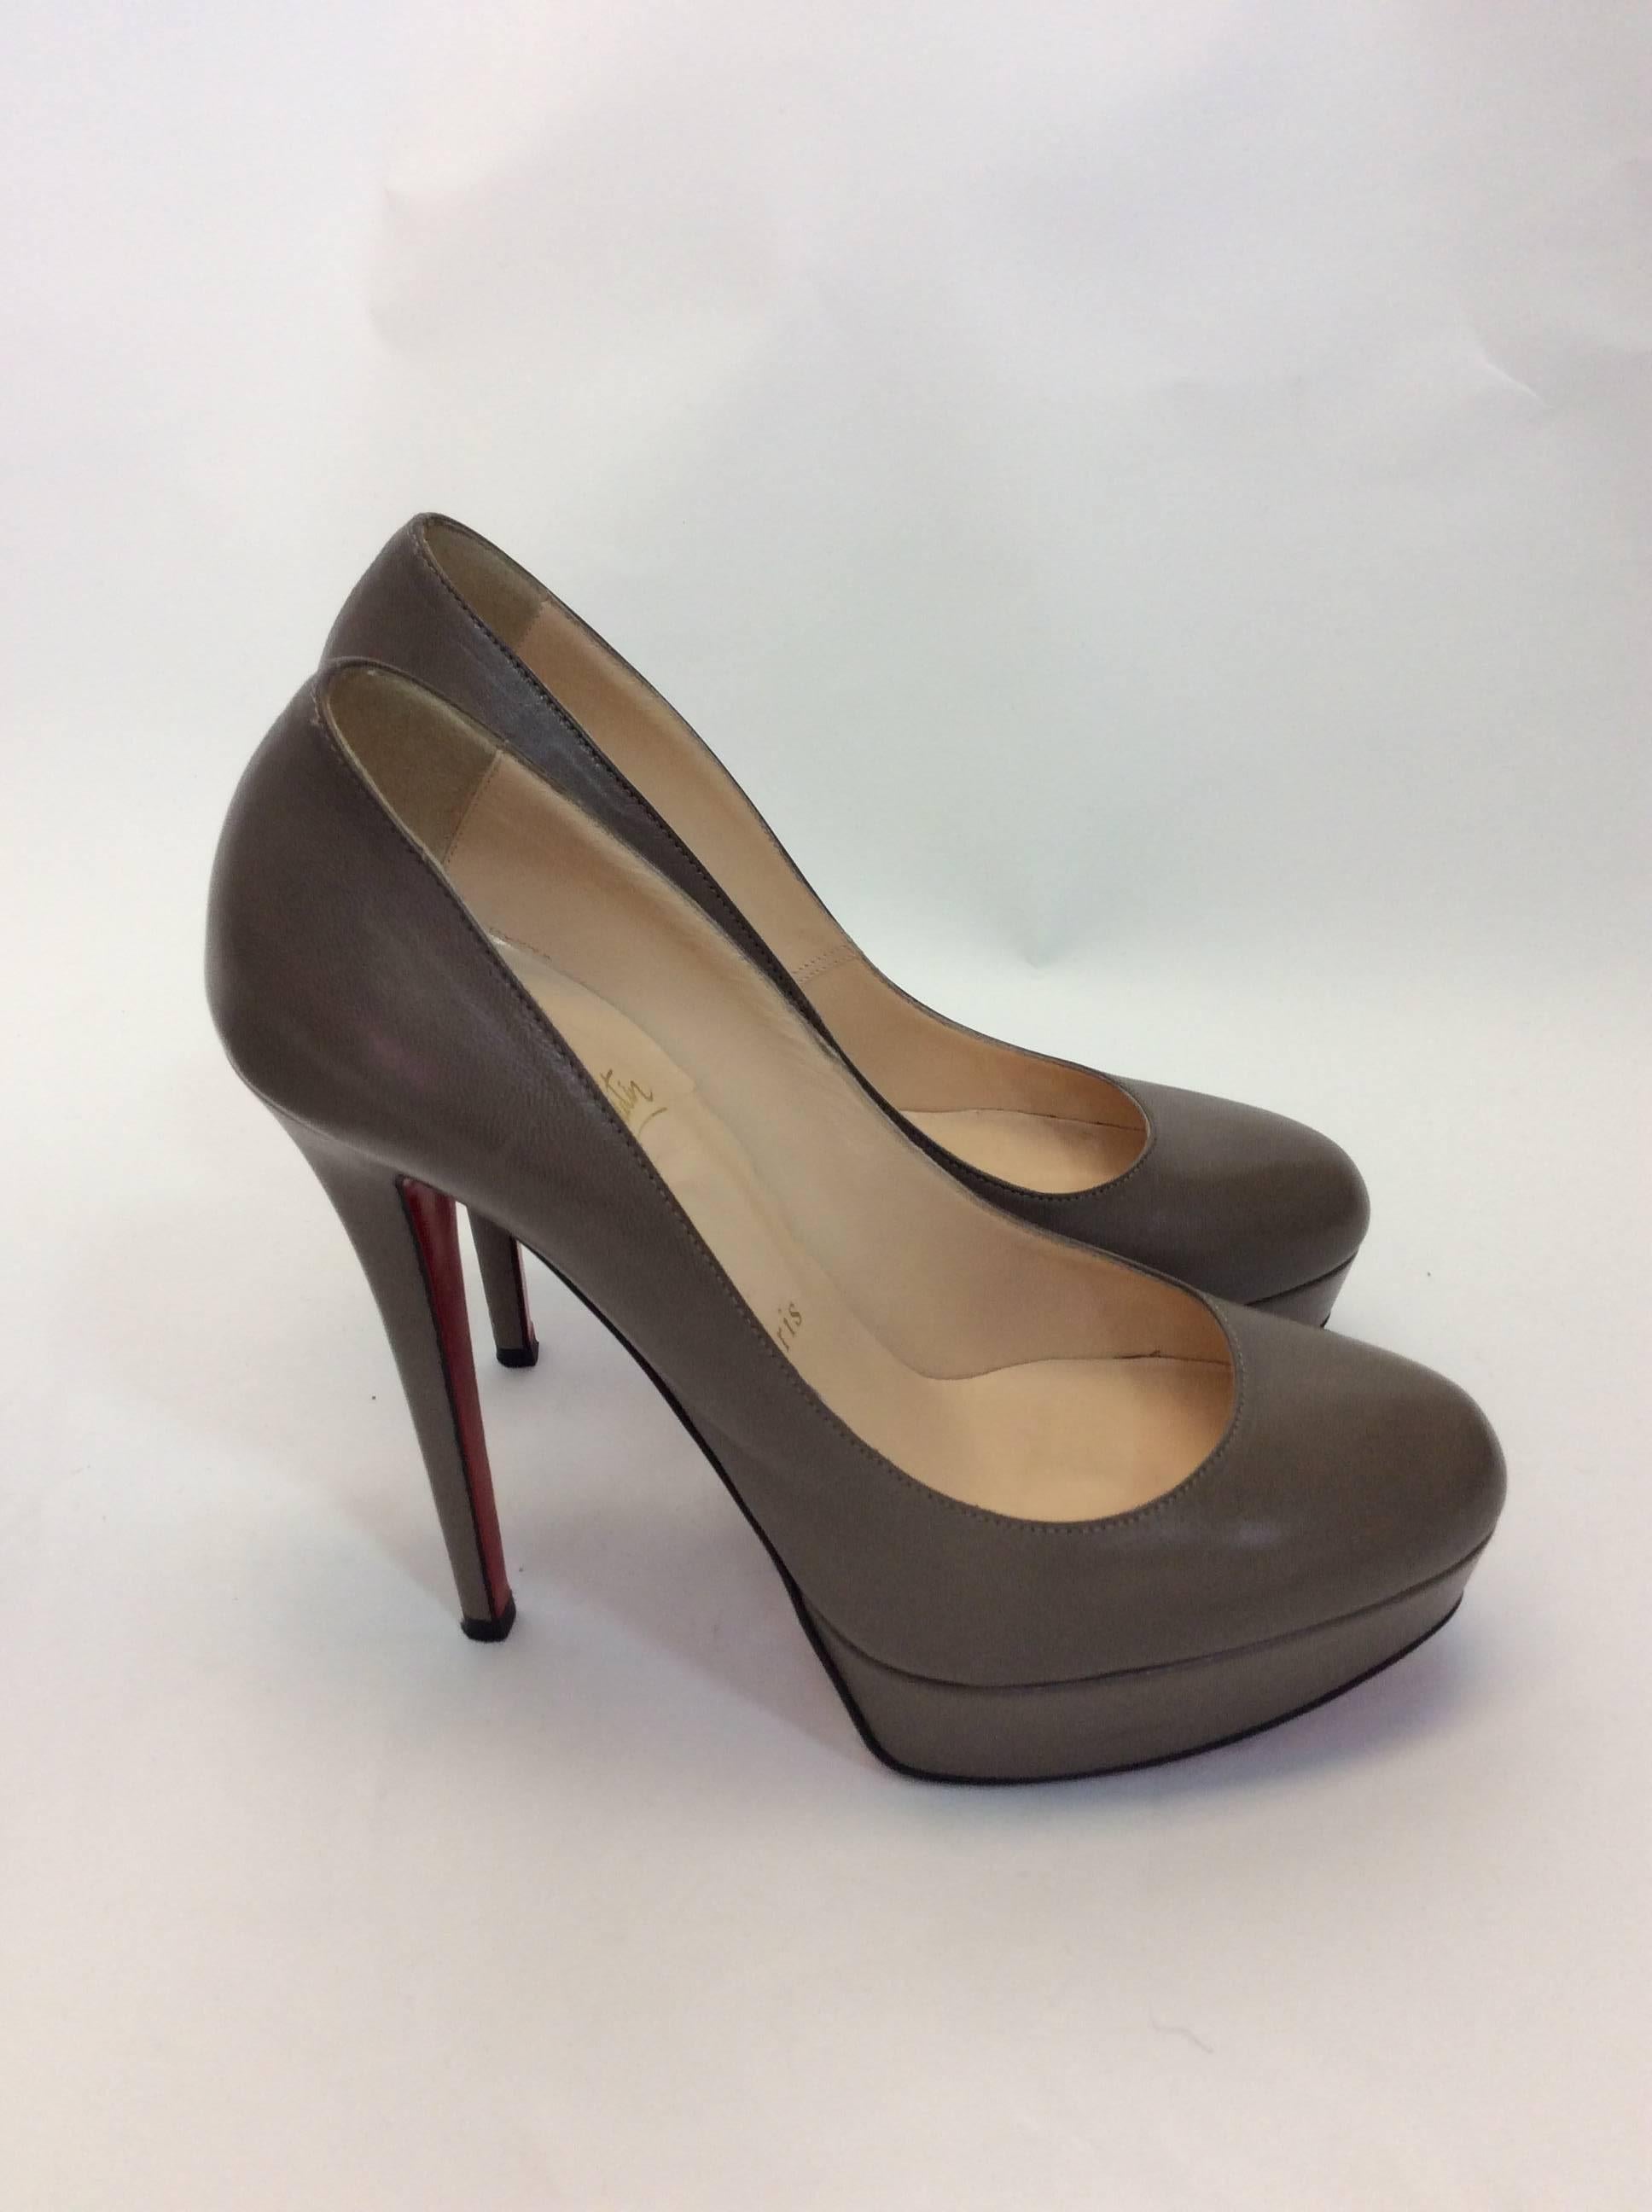 Christian Louboutin Gray Leather Platform Pumps
Size 7.5
$350
5 inch heel, 1.5 inch platform
